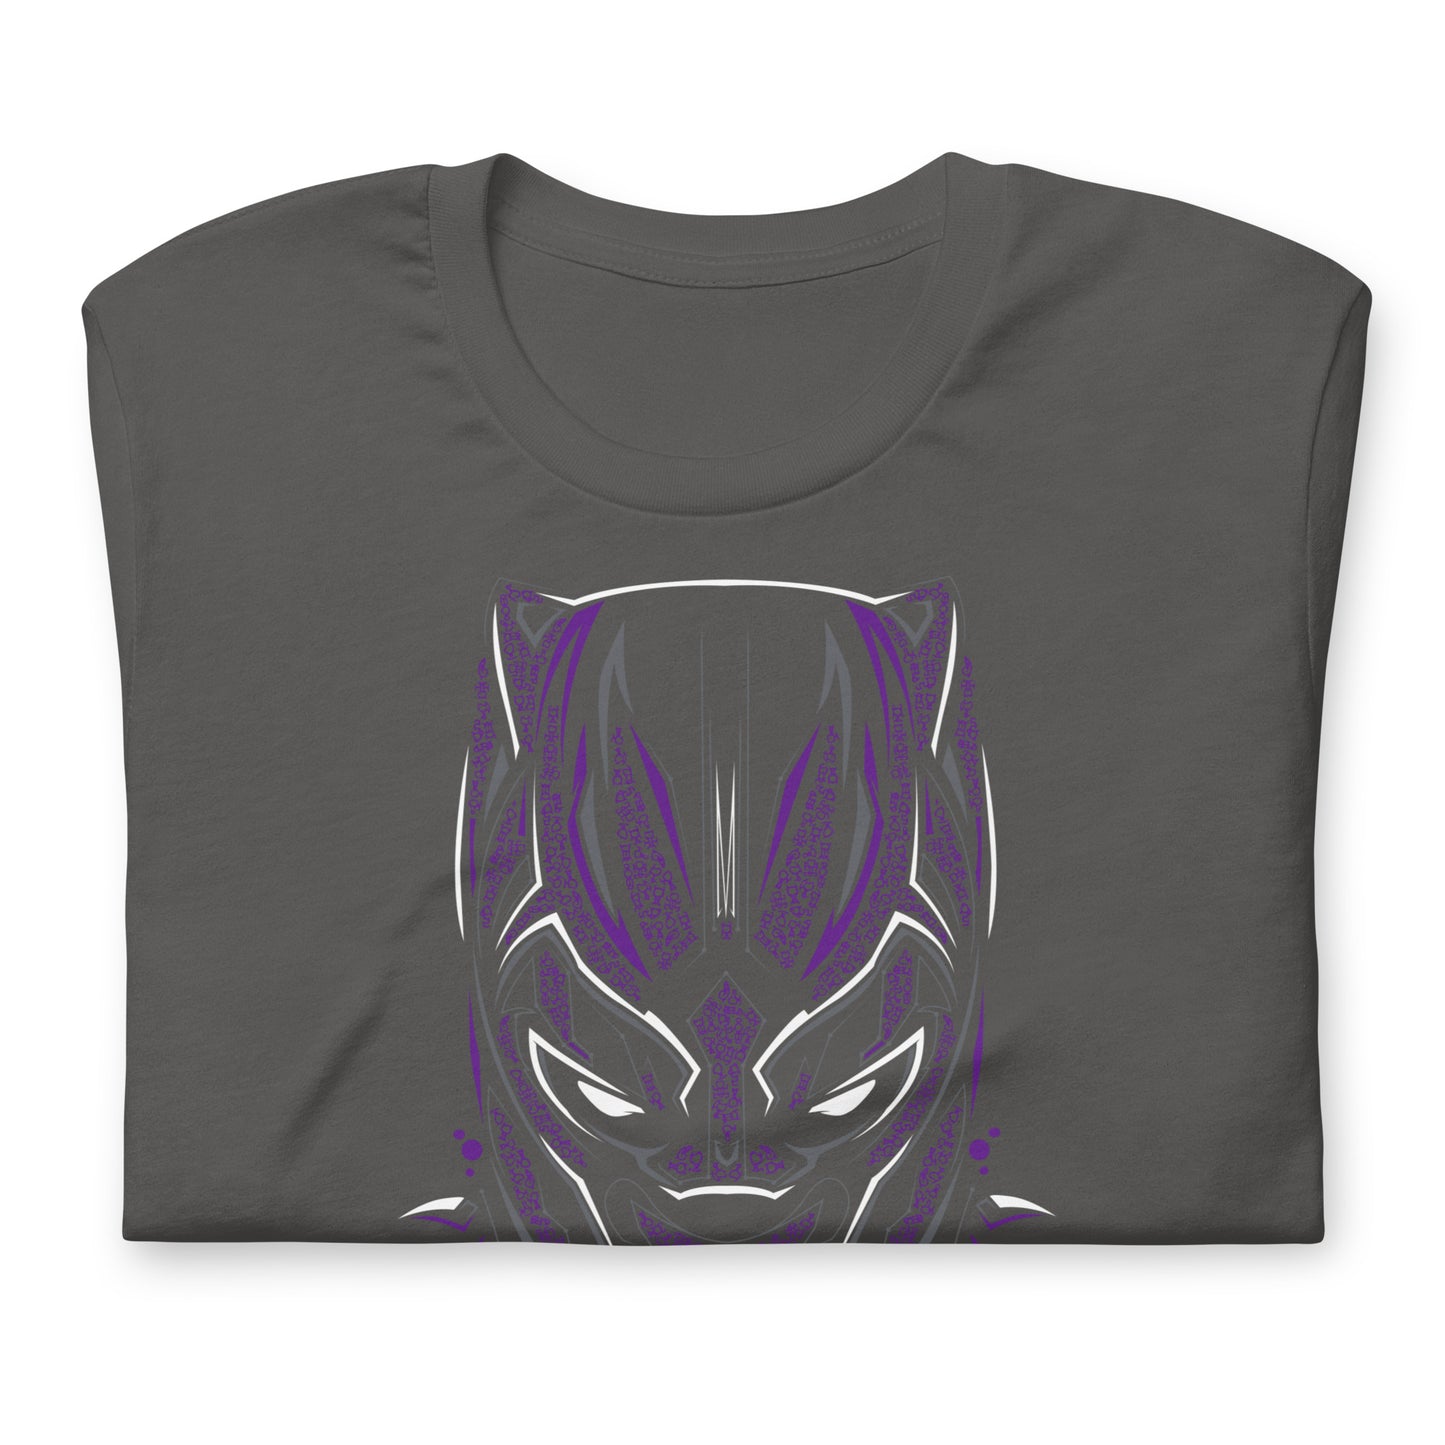 Camiseta "BARRANKO FOREVER" Black Panther